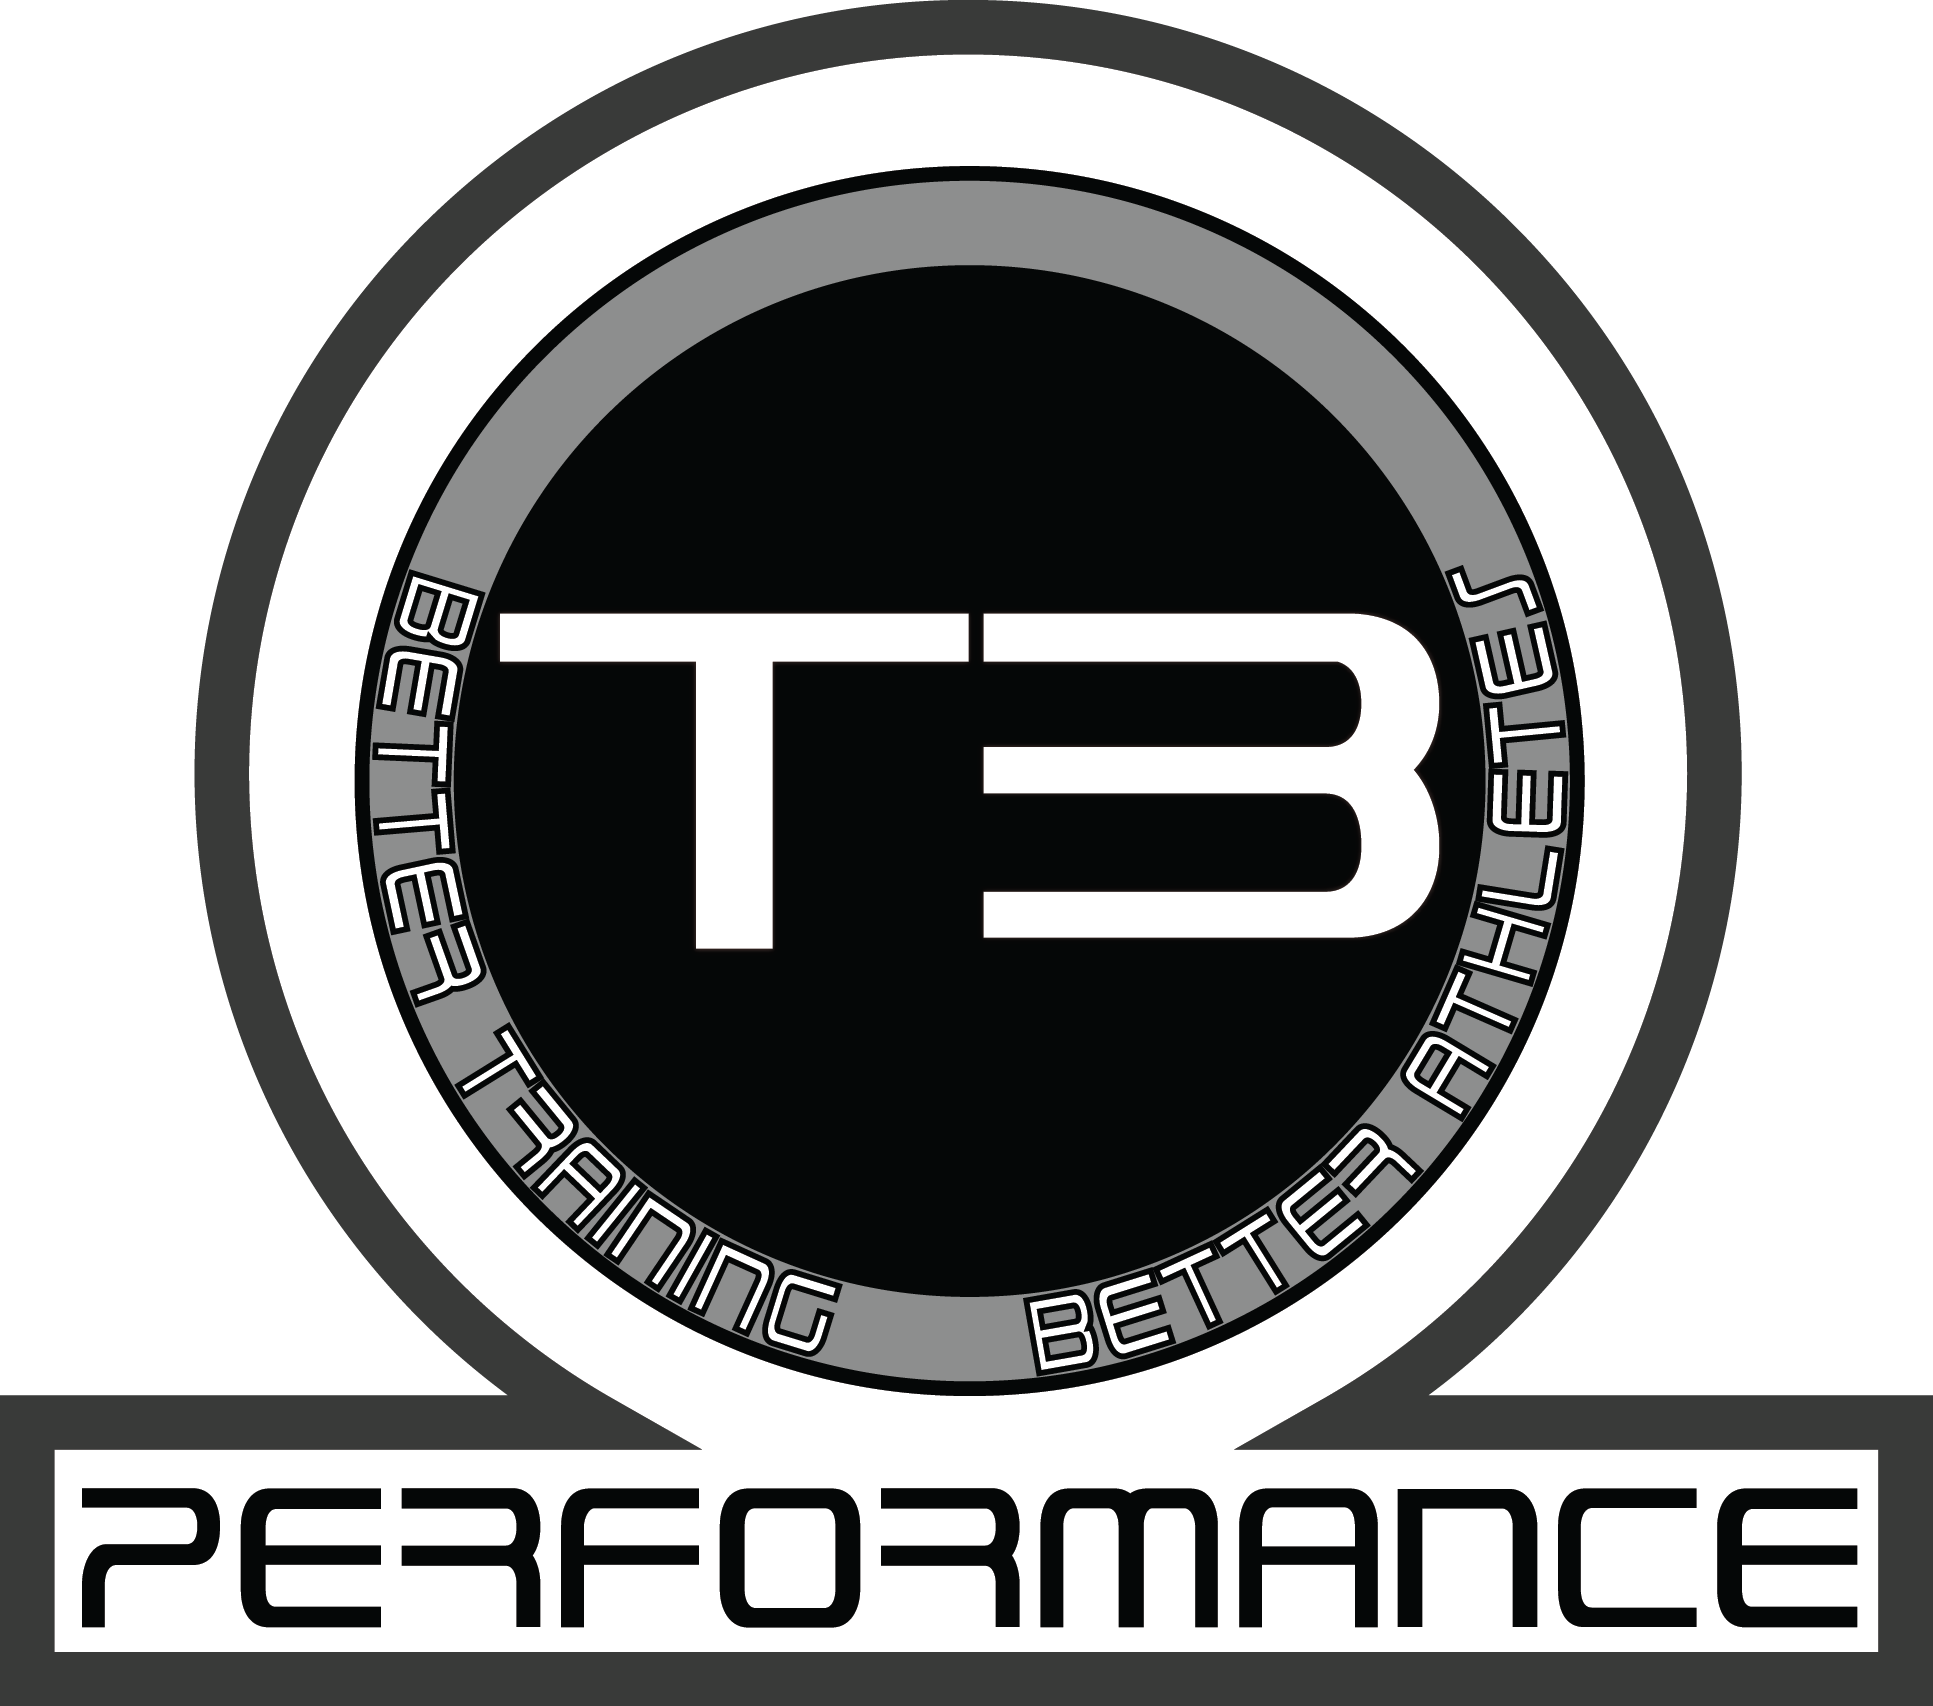 T3 Performance Beachwood logo